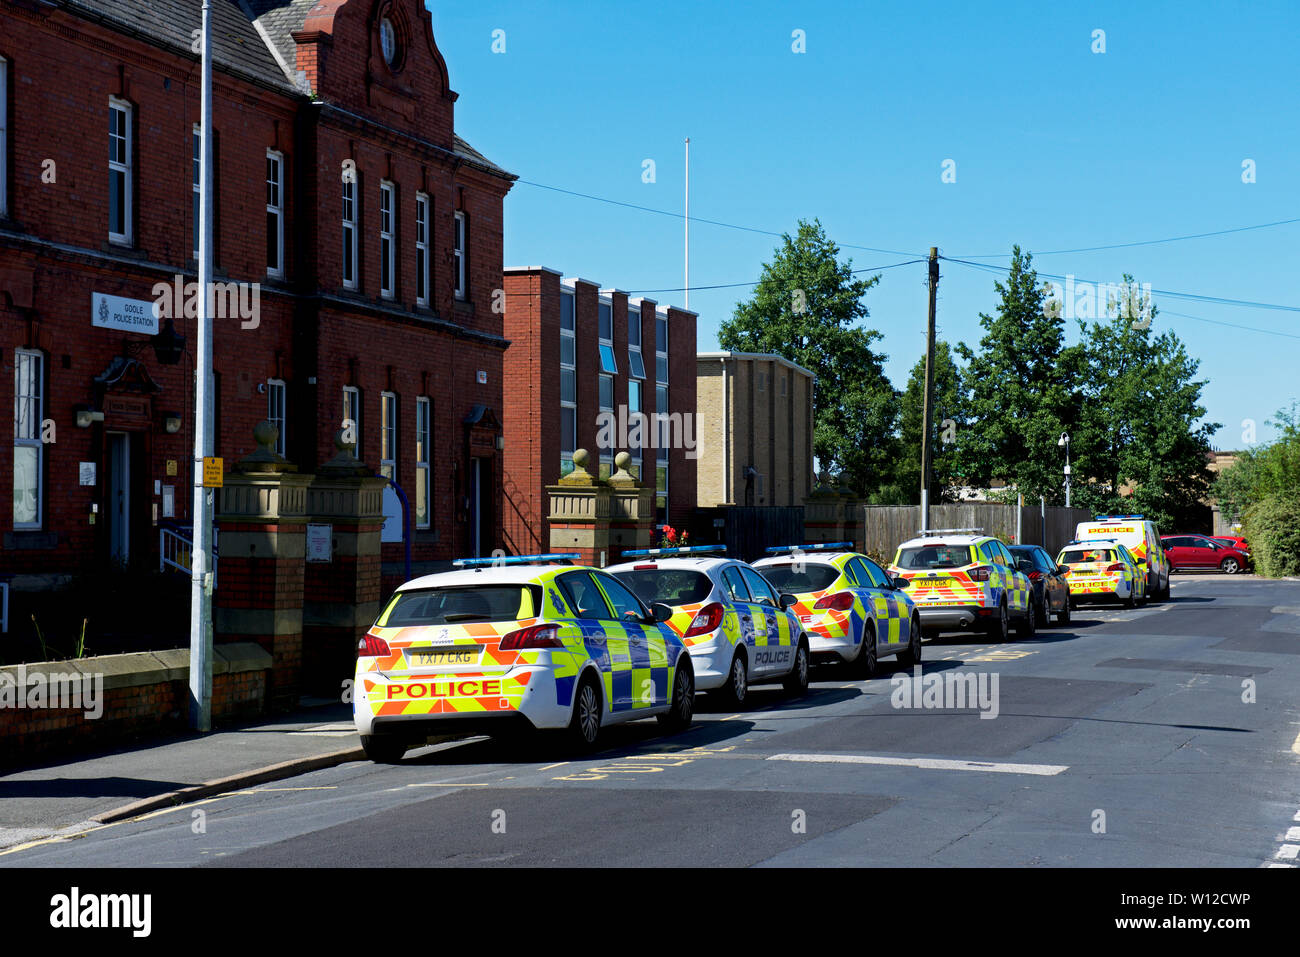 Police cars parked outside police station, Goole, East Yorkshire, England UK Stock Photo